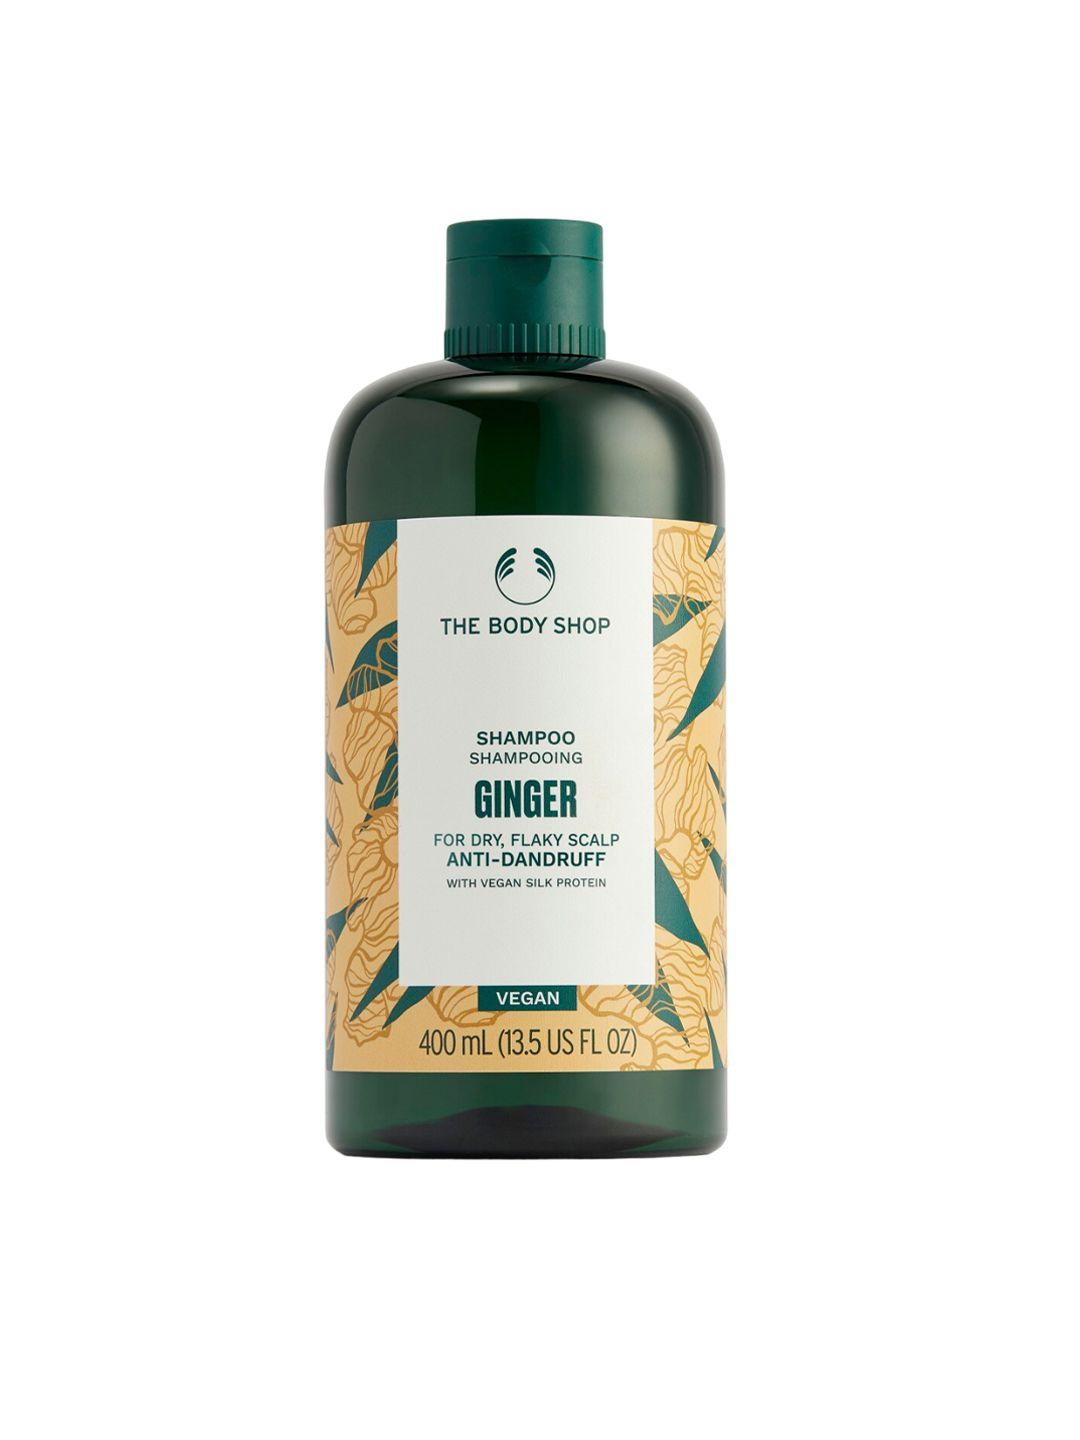 the body shop ginger anti-dandruff vegan shampoo with silk protein - 400 ml